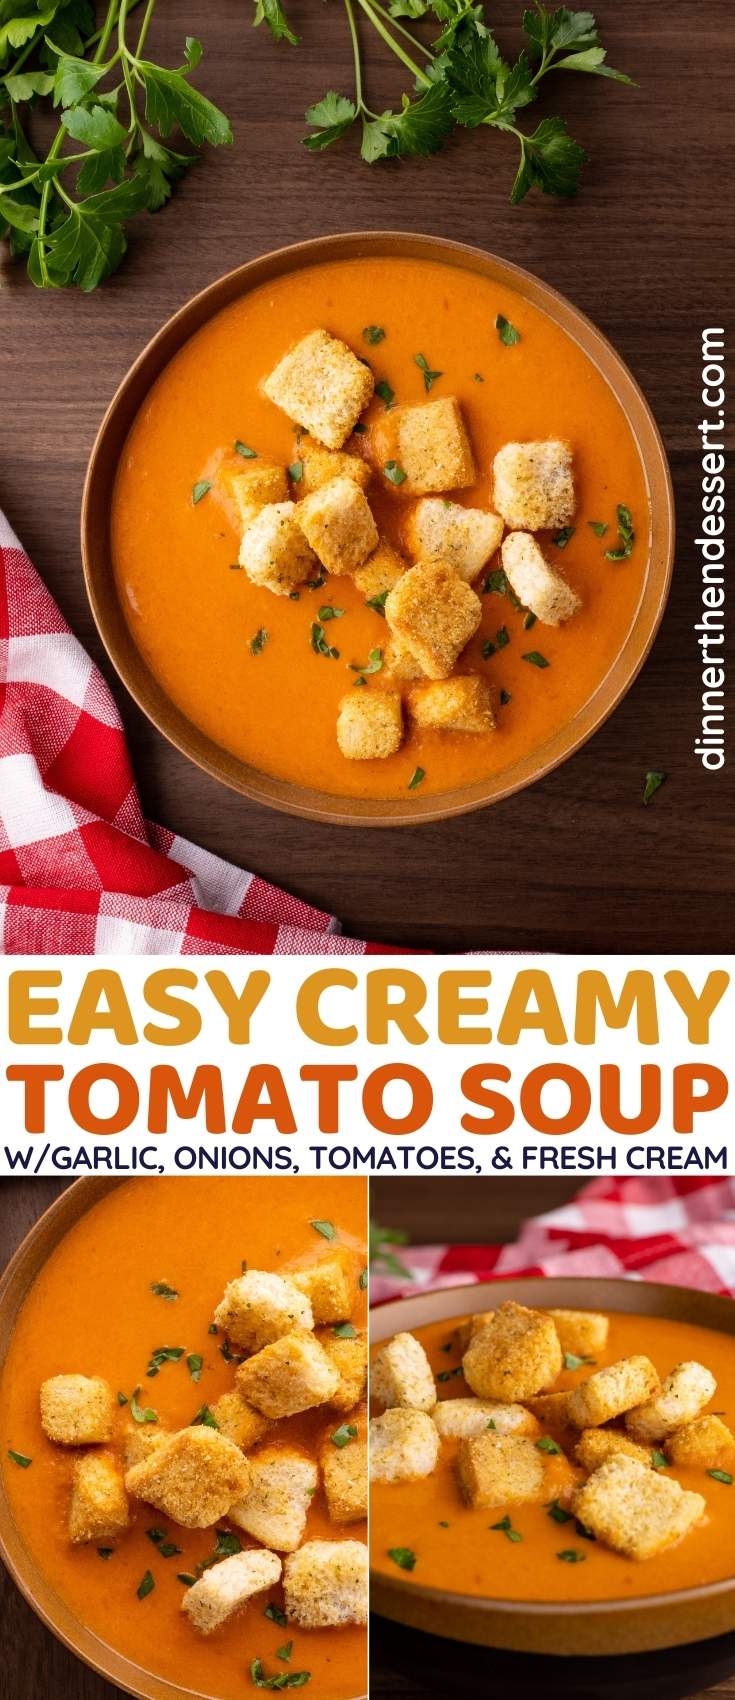 Easy Creamy Tomato Soup Collage